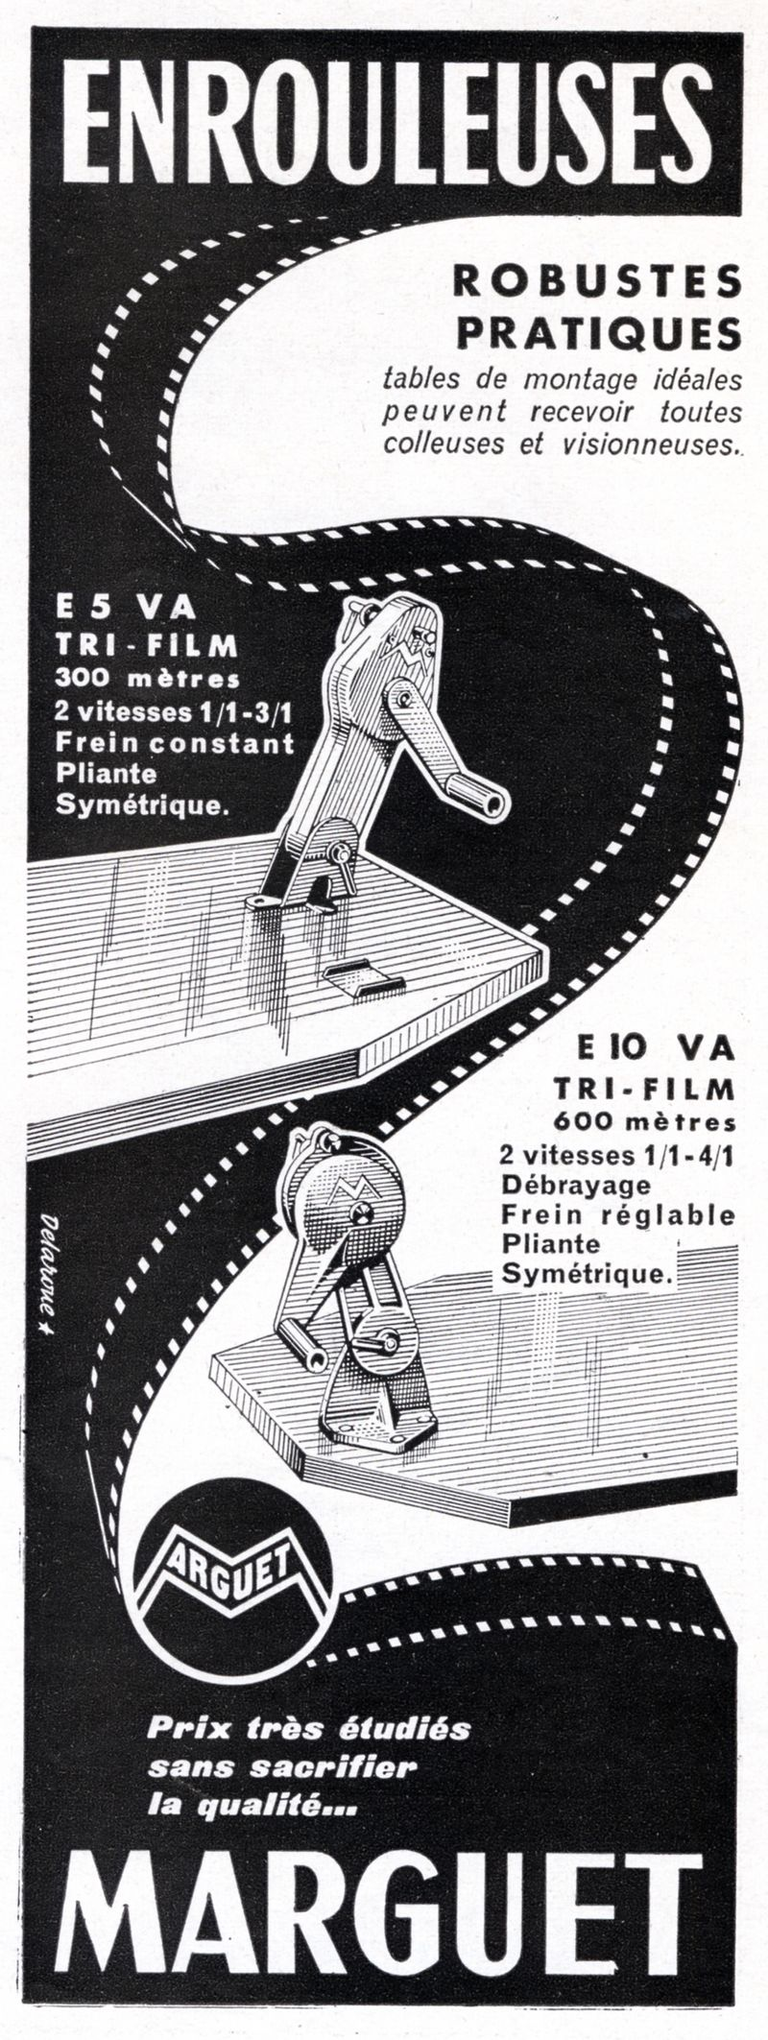 Marguet - enrouleuse E5 VA tri-film, E 10 VA tri-film - 1959